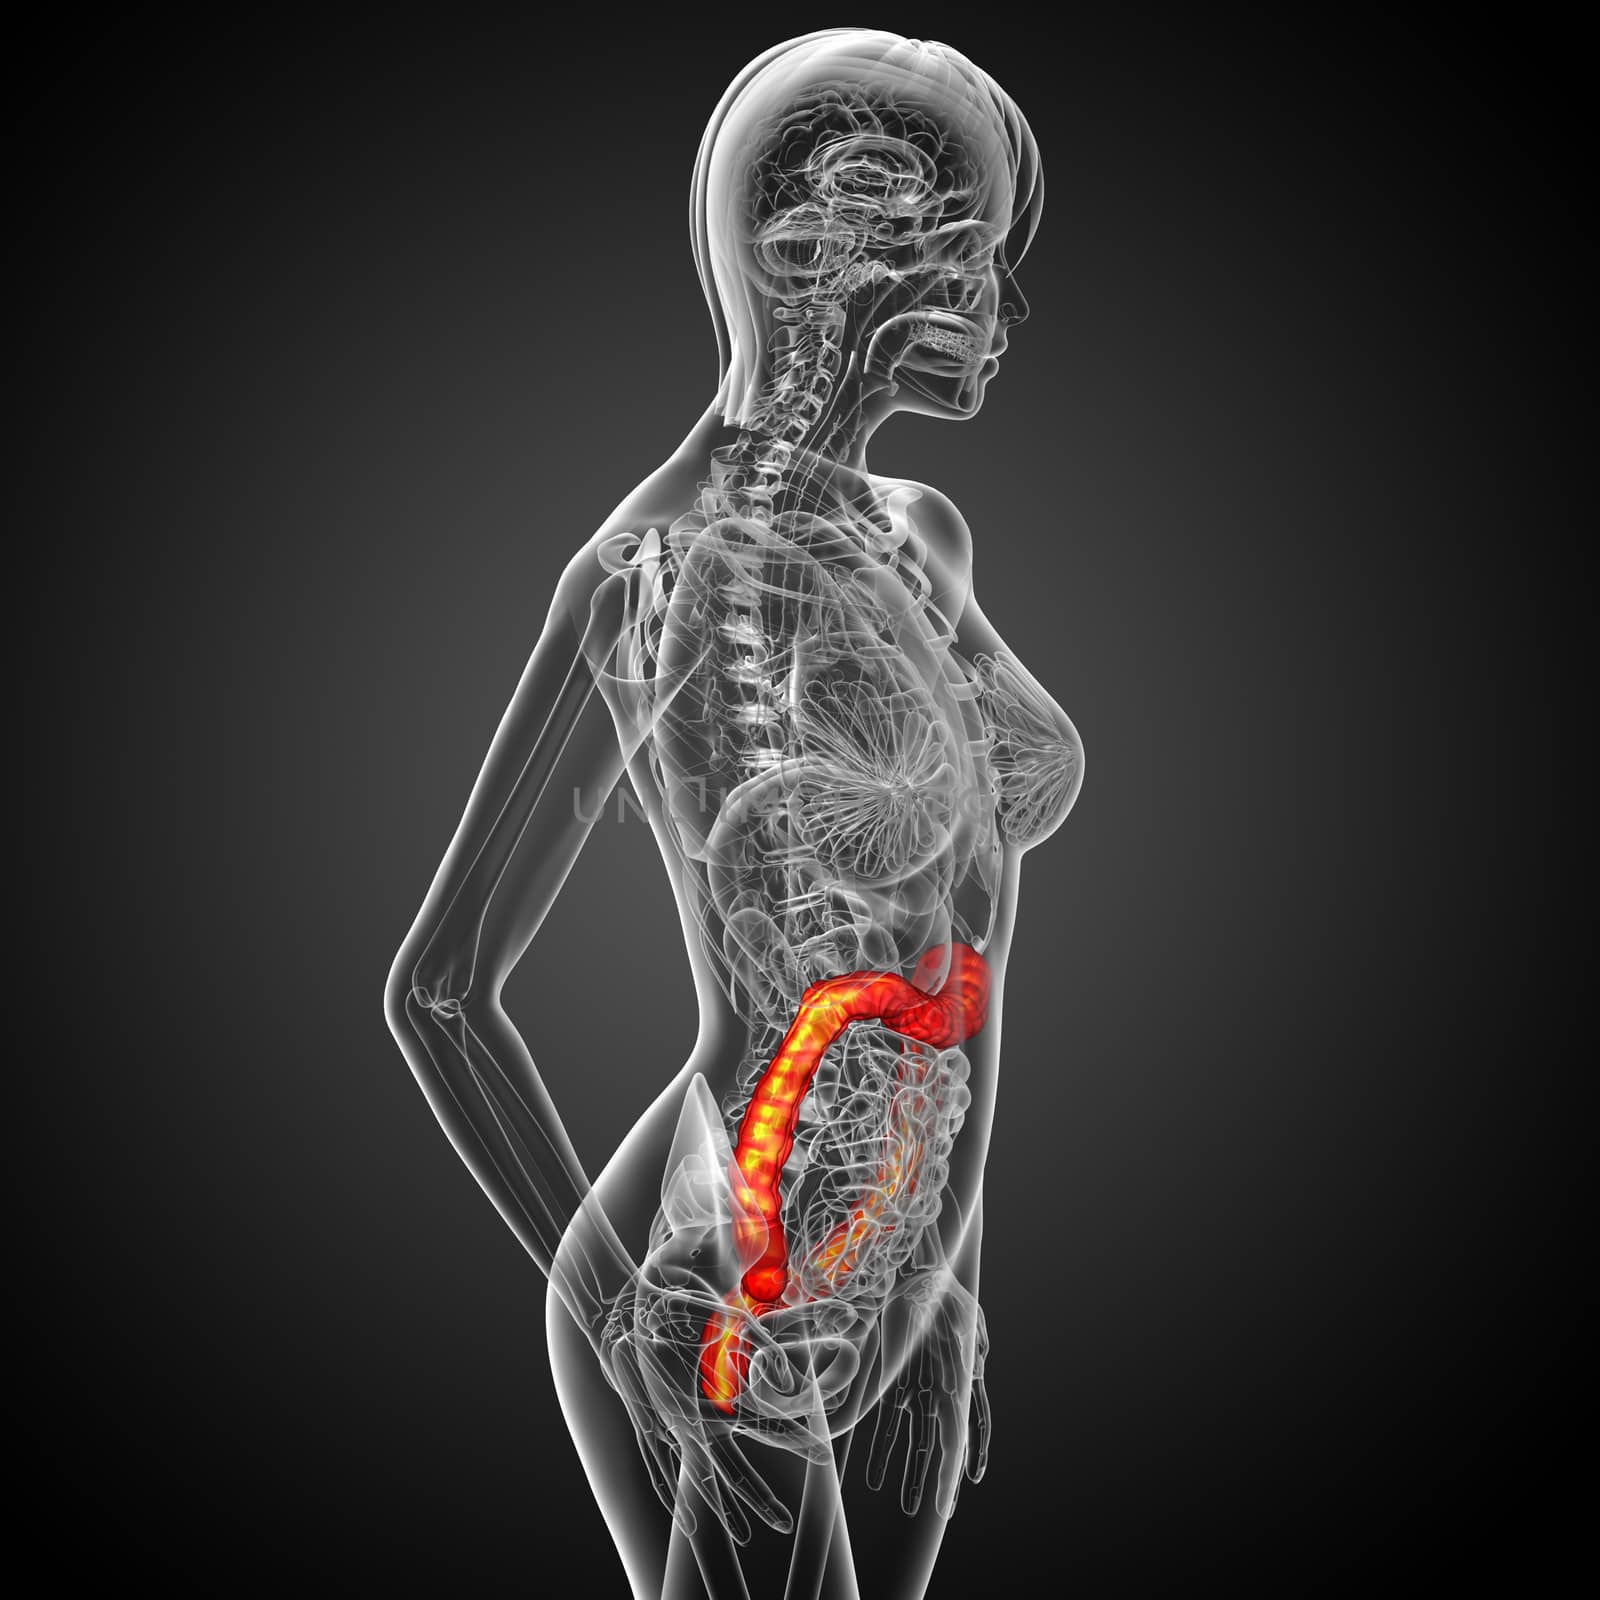 3d render medical illustration of the human larg intestine - side view